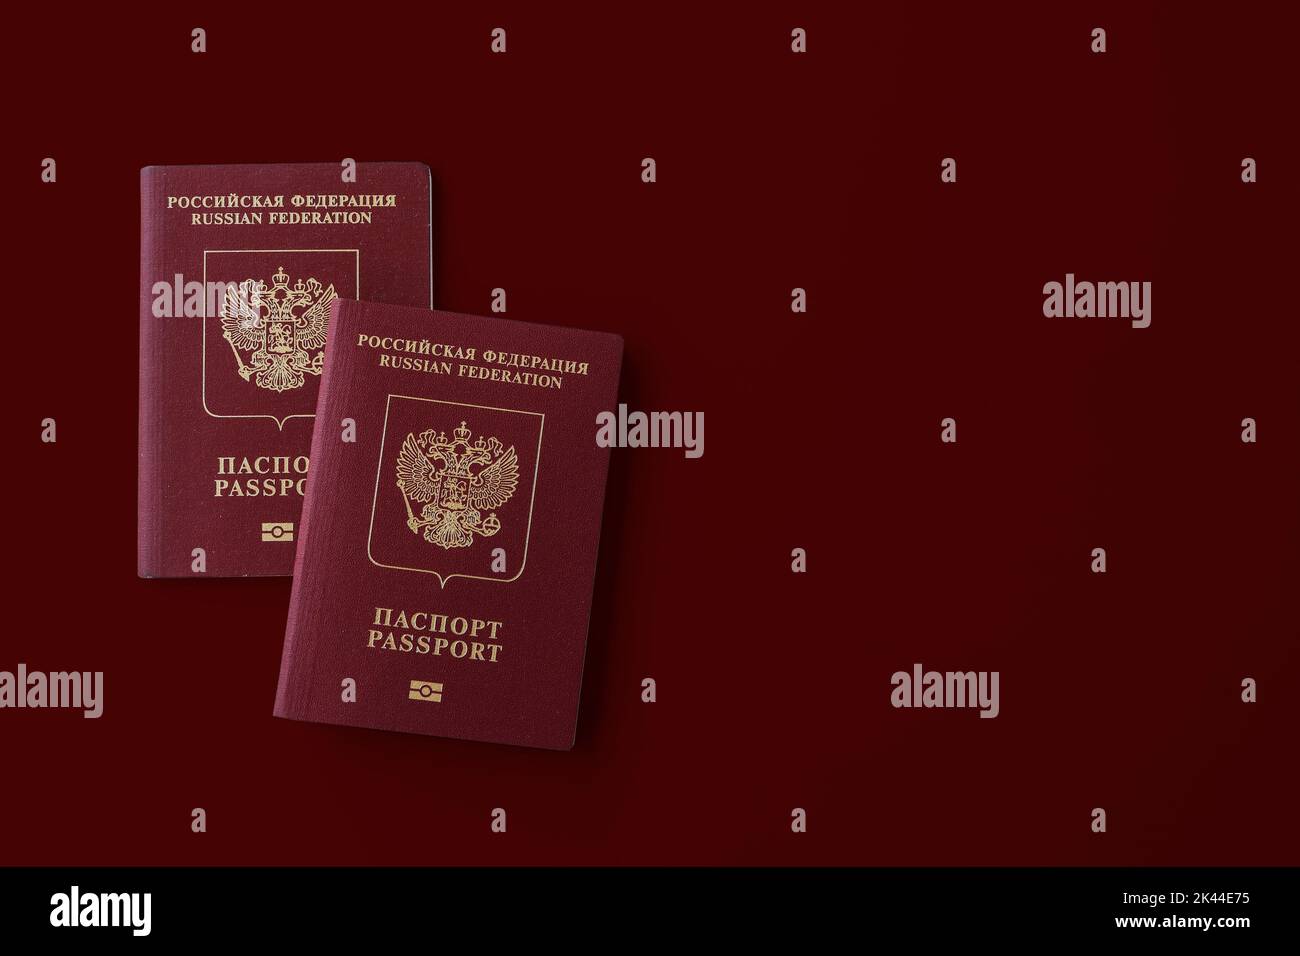 Two Russian international passports on a burgundy background. Stock Photo